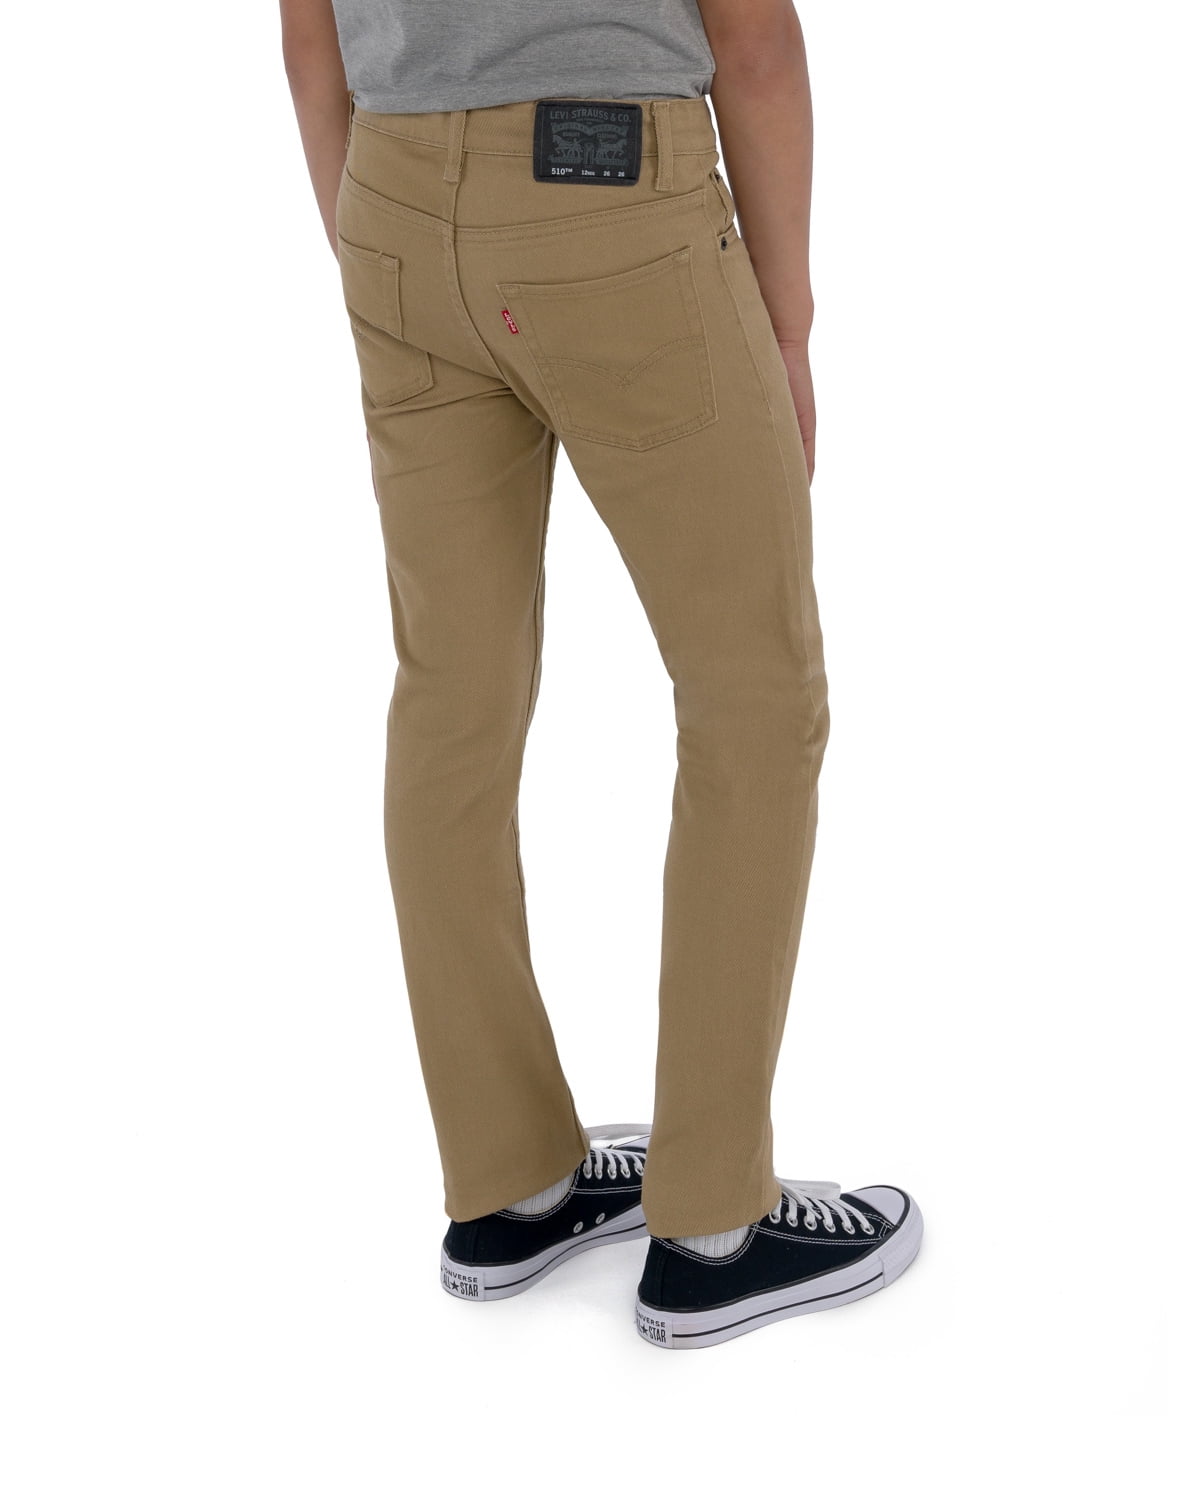 Levi's Boys' 510 Skinny Fit Performance Jeans, Sizes 4-20 